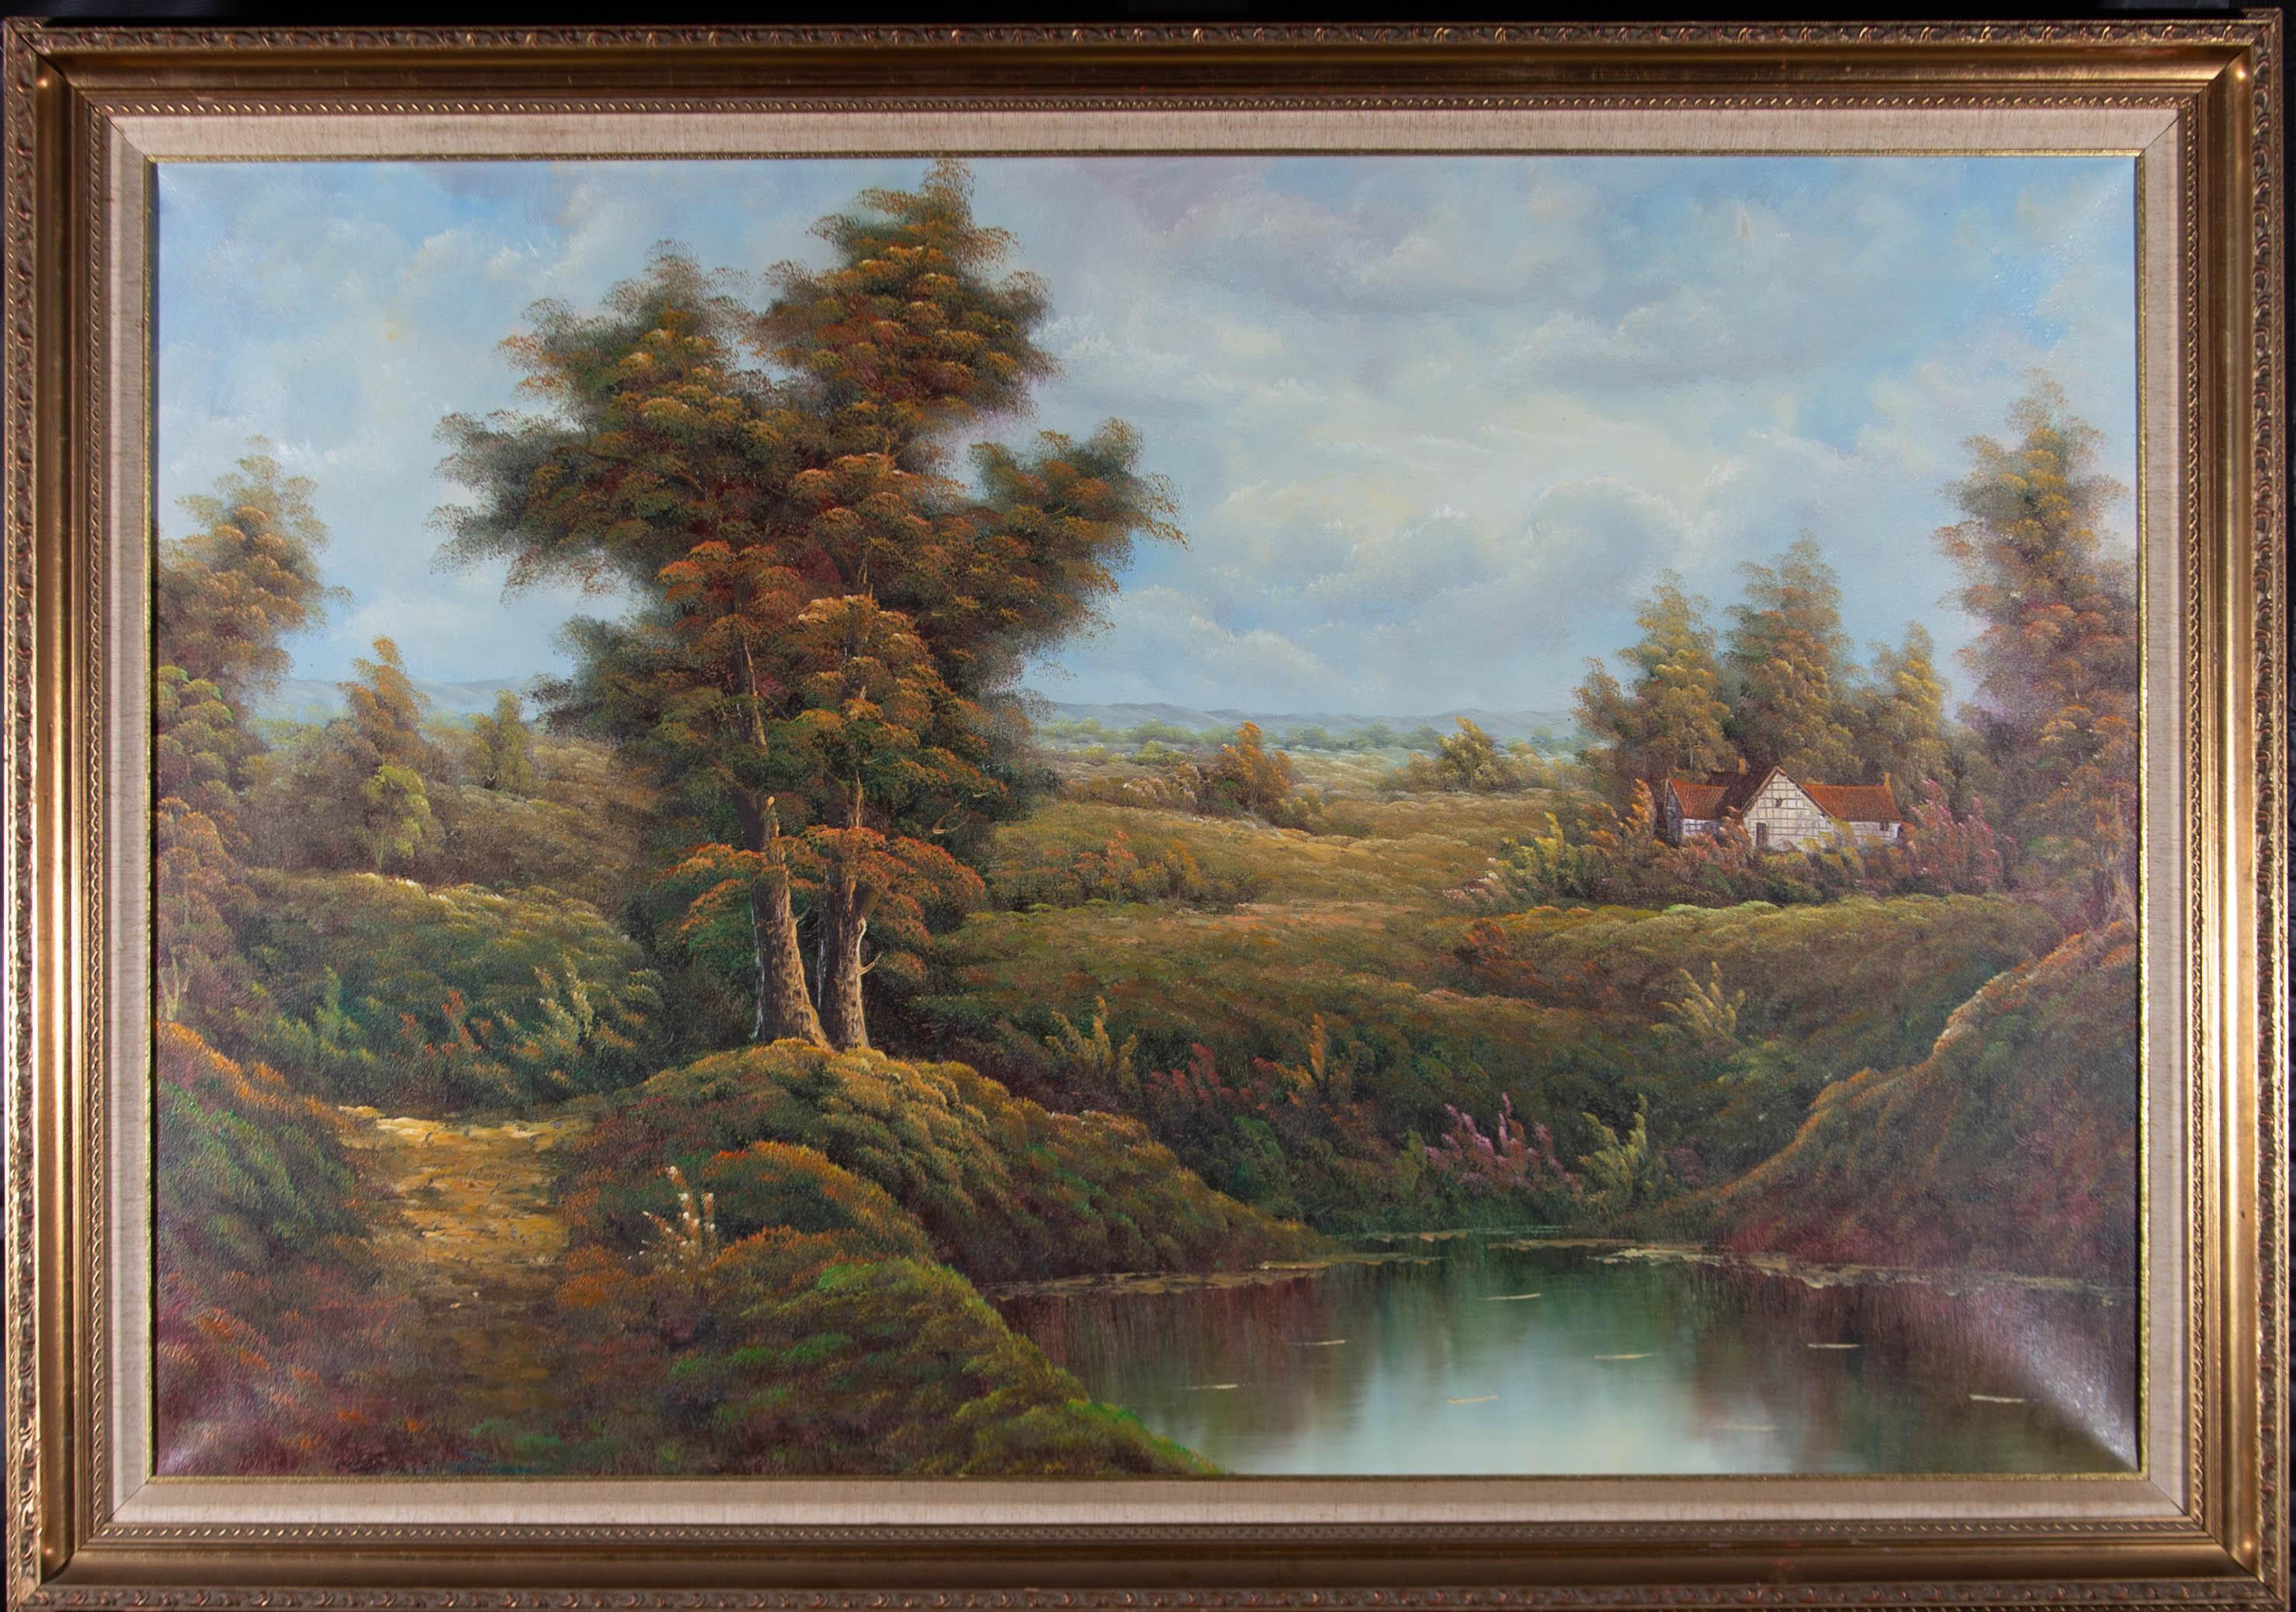 Unknown Landscape Painting - Large 20th Century Oil - Rustic Landscape